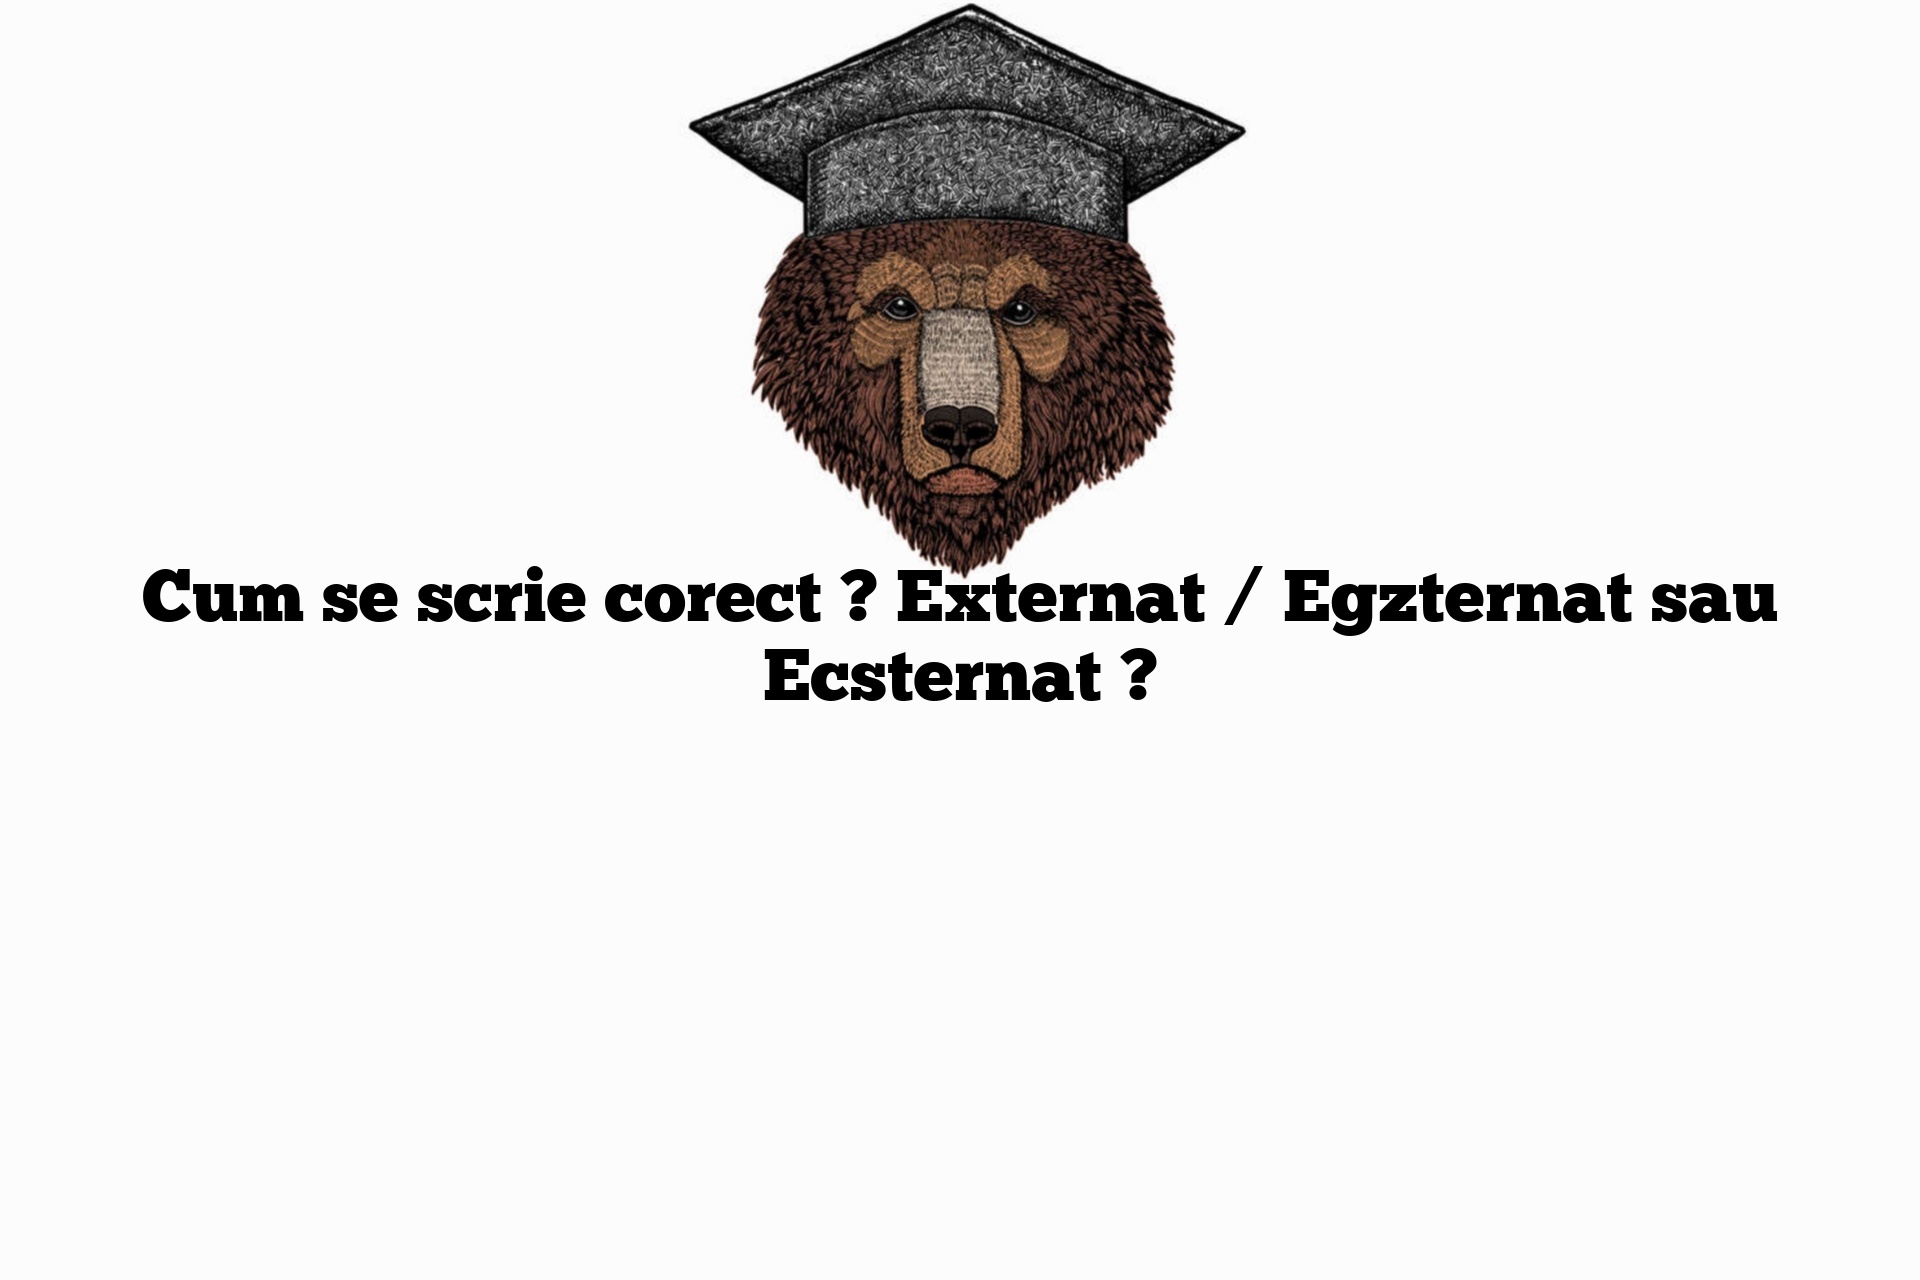 Cum se scrie corect ? Externat / Egzternat sau Ecsternat ?